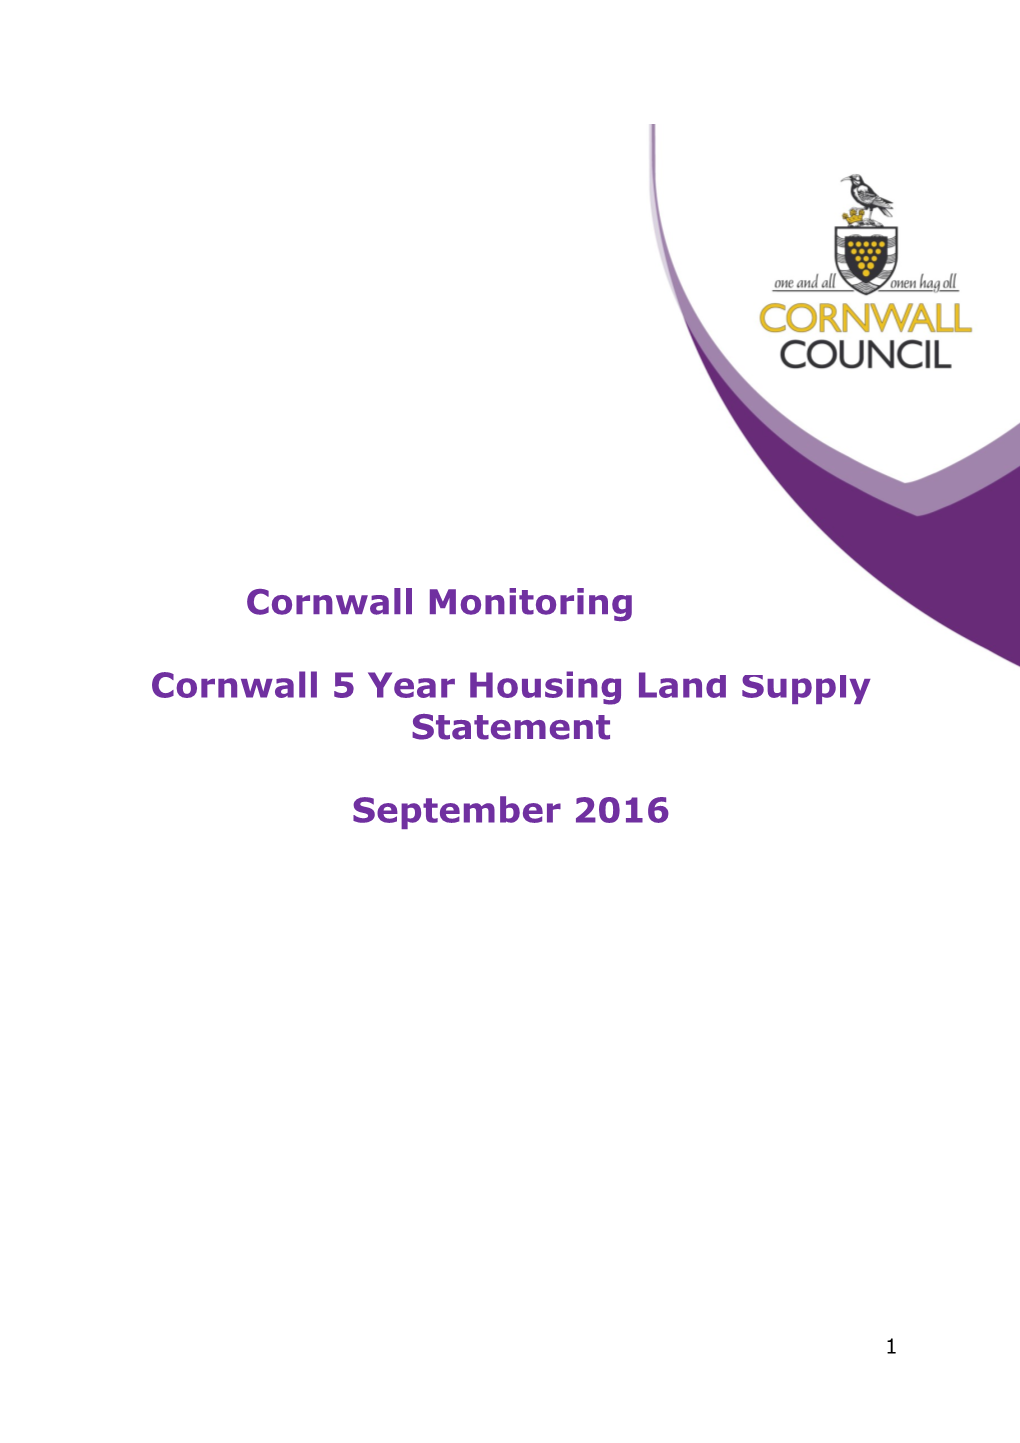 Cornwall 5 Year Housing Land Supply Statement